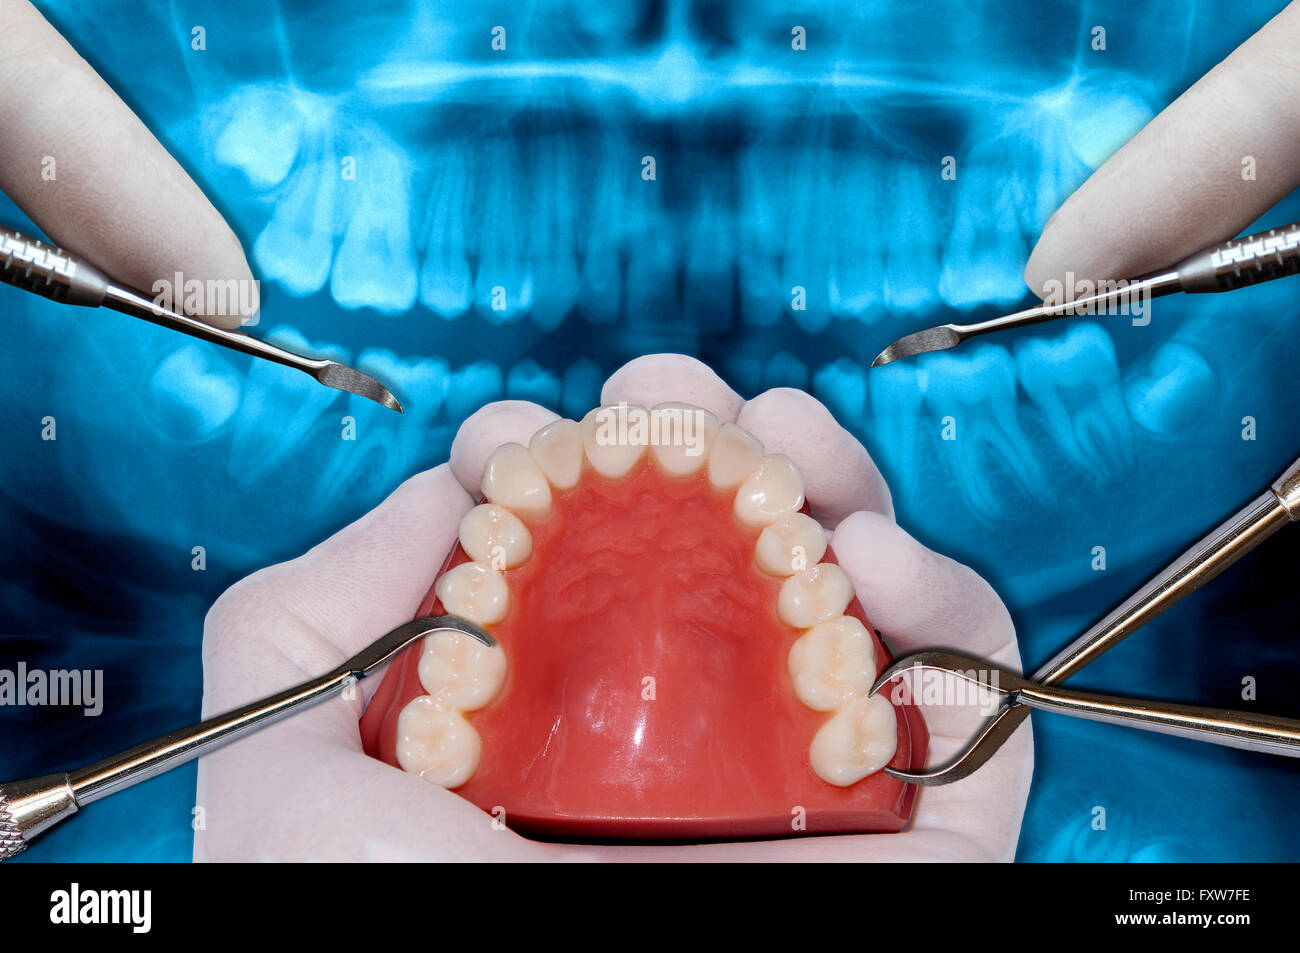 surgery simulation with orthodontics tools Stock Photo